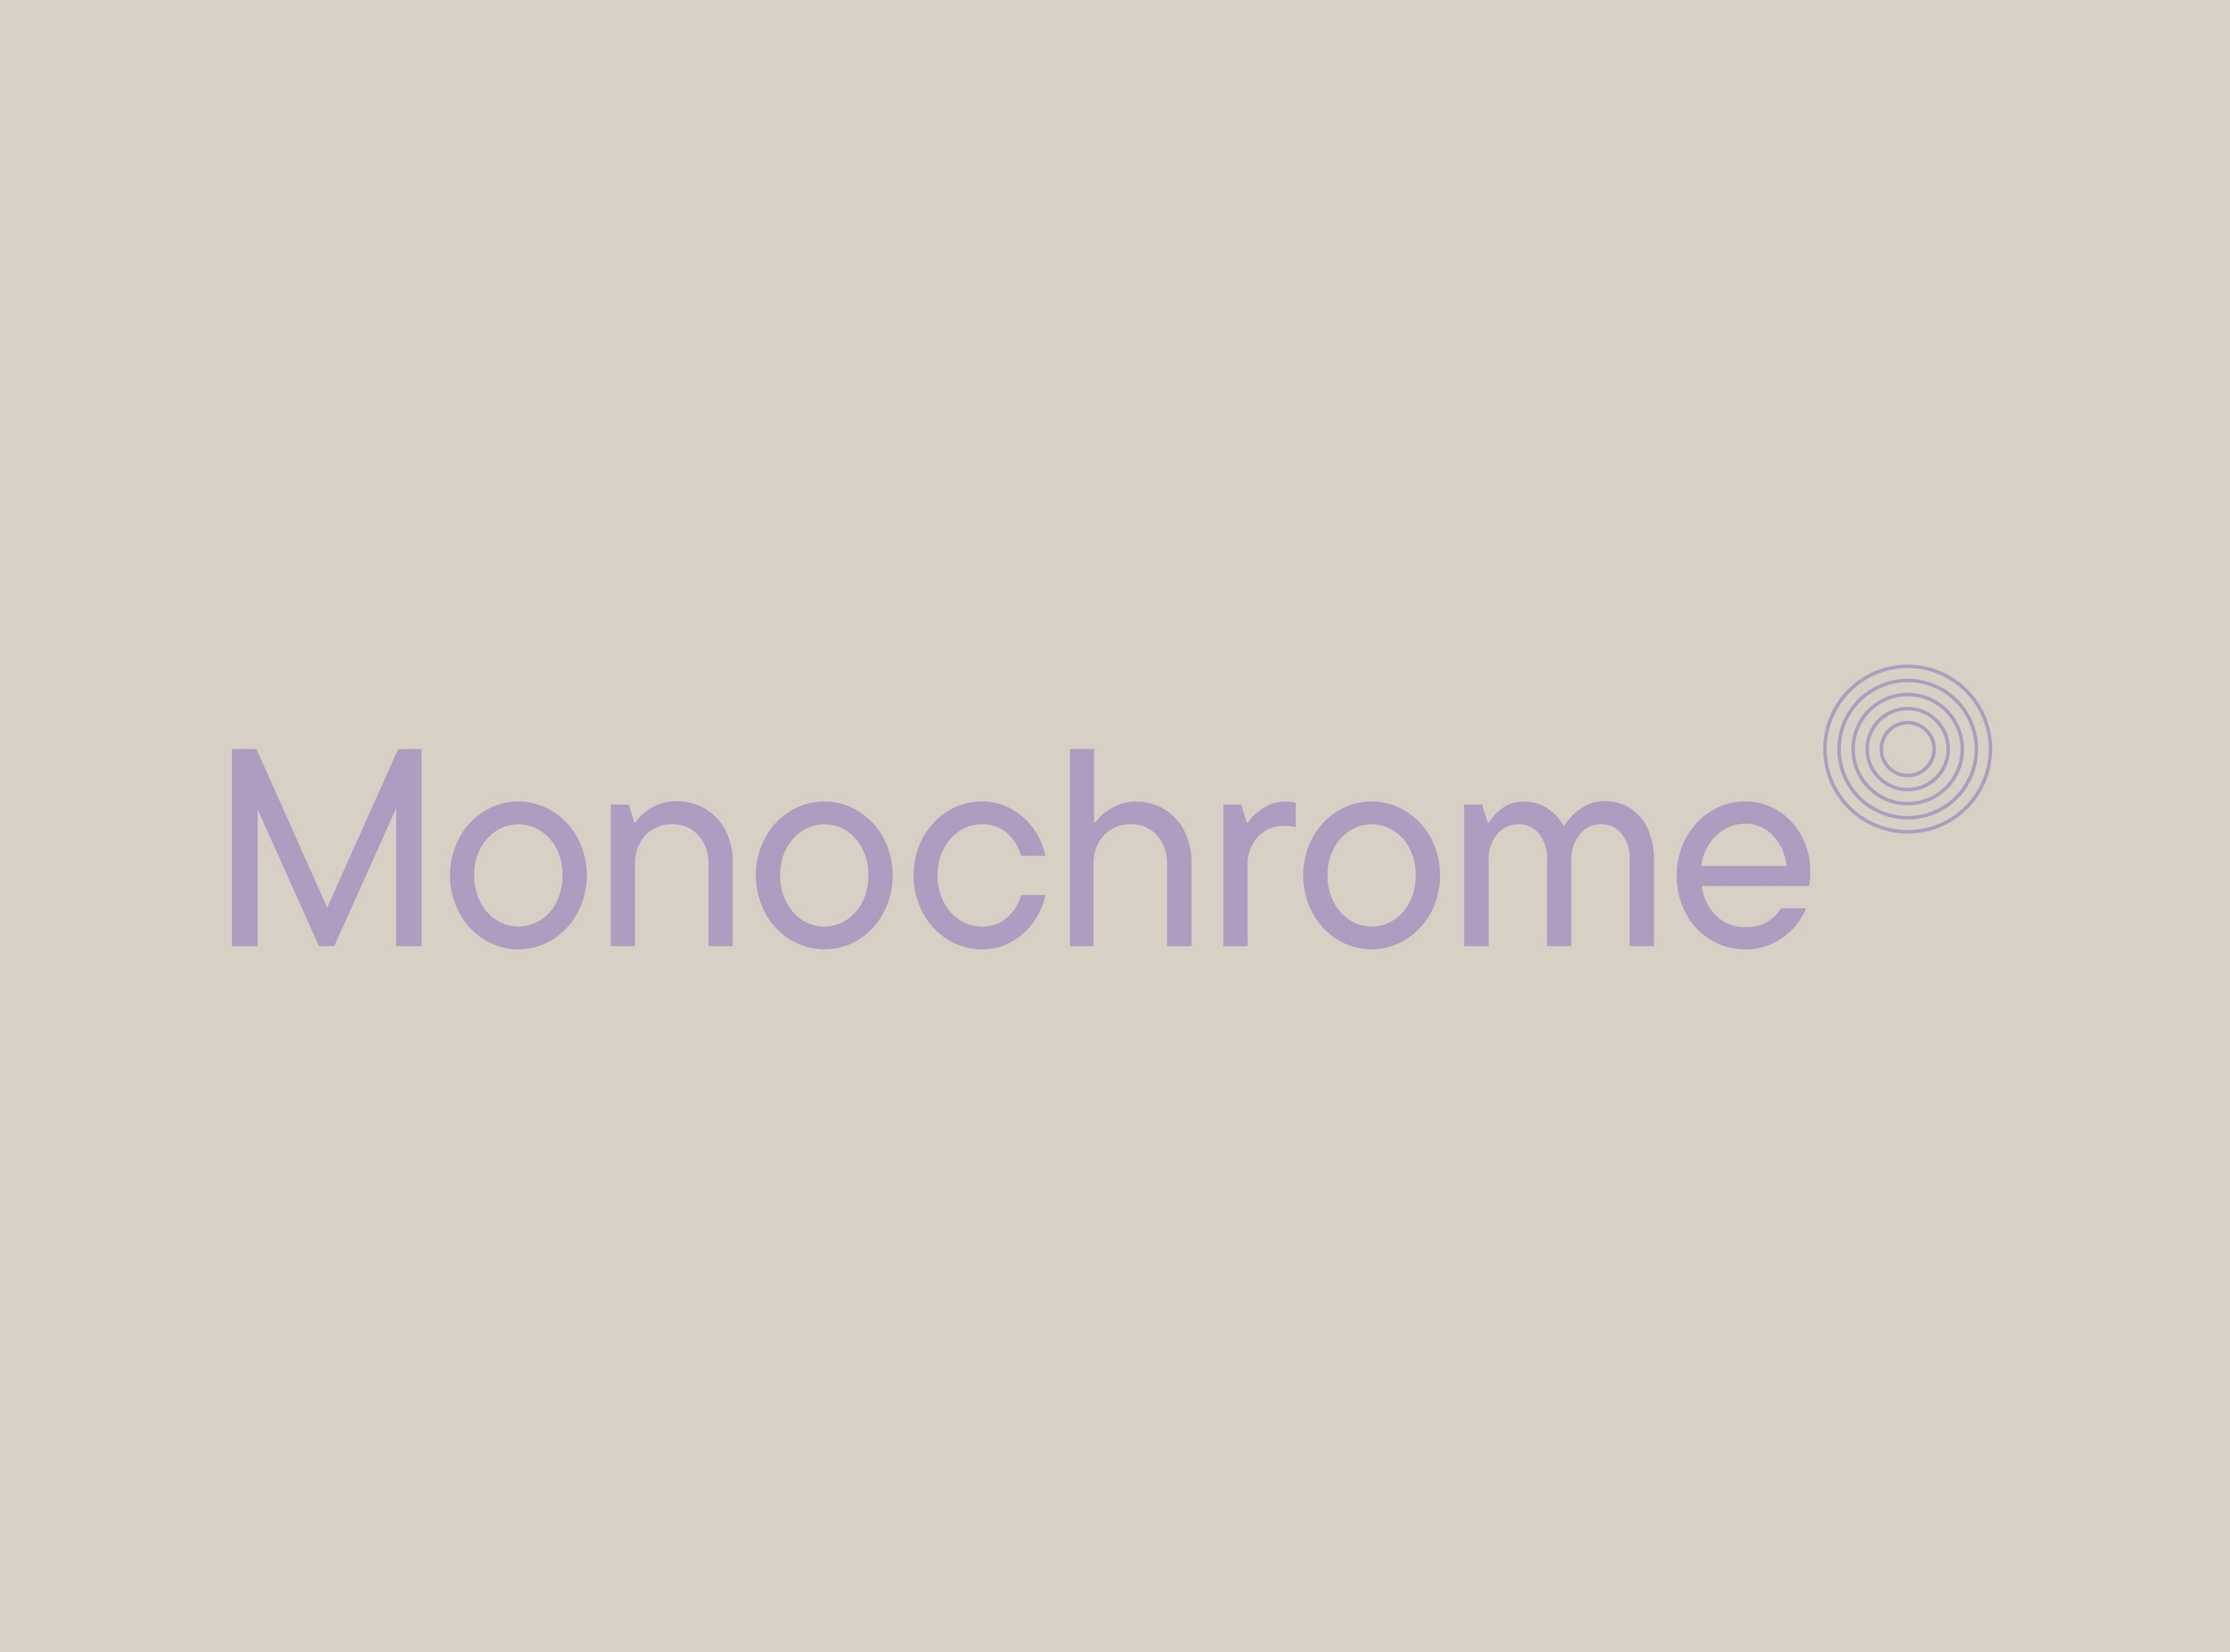 upcoming-studio-monochrome-logo-animation.jpg